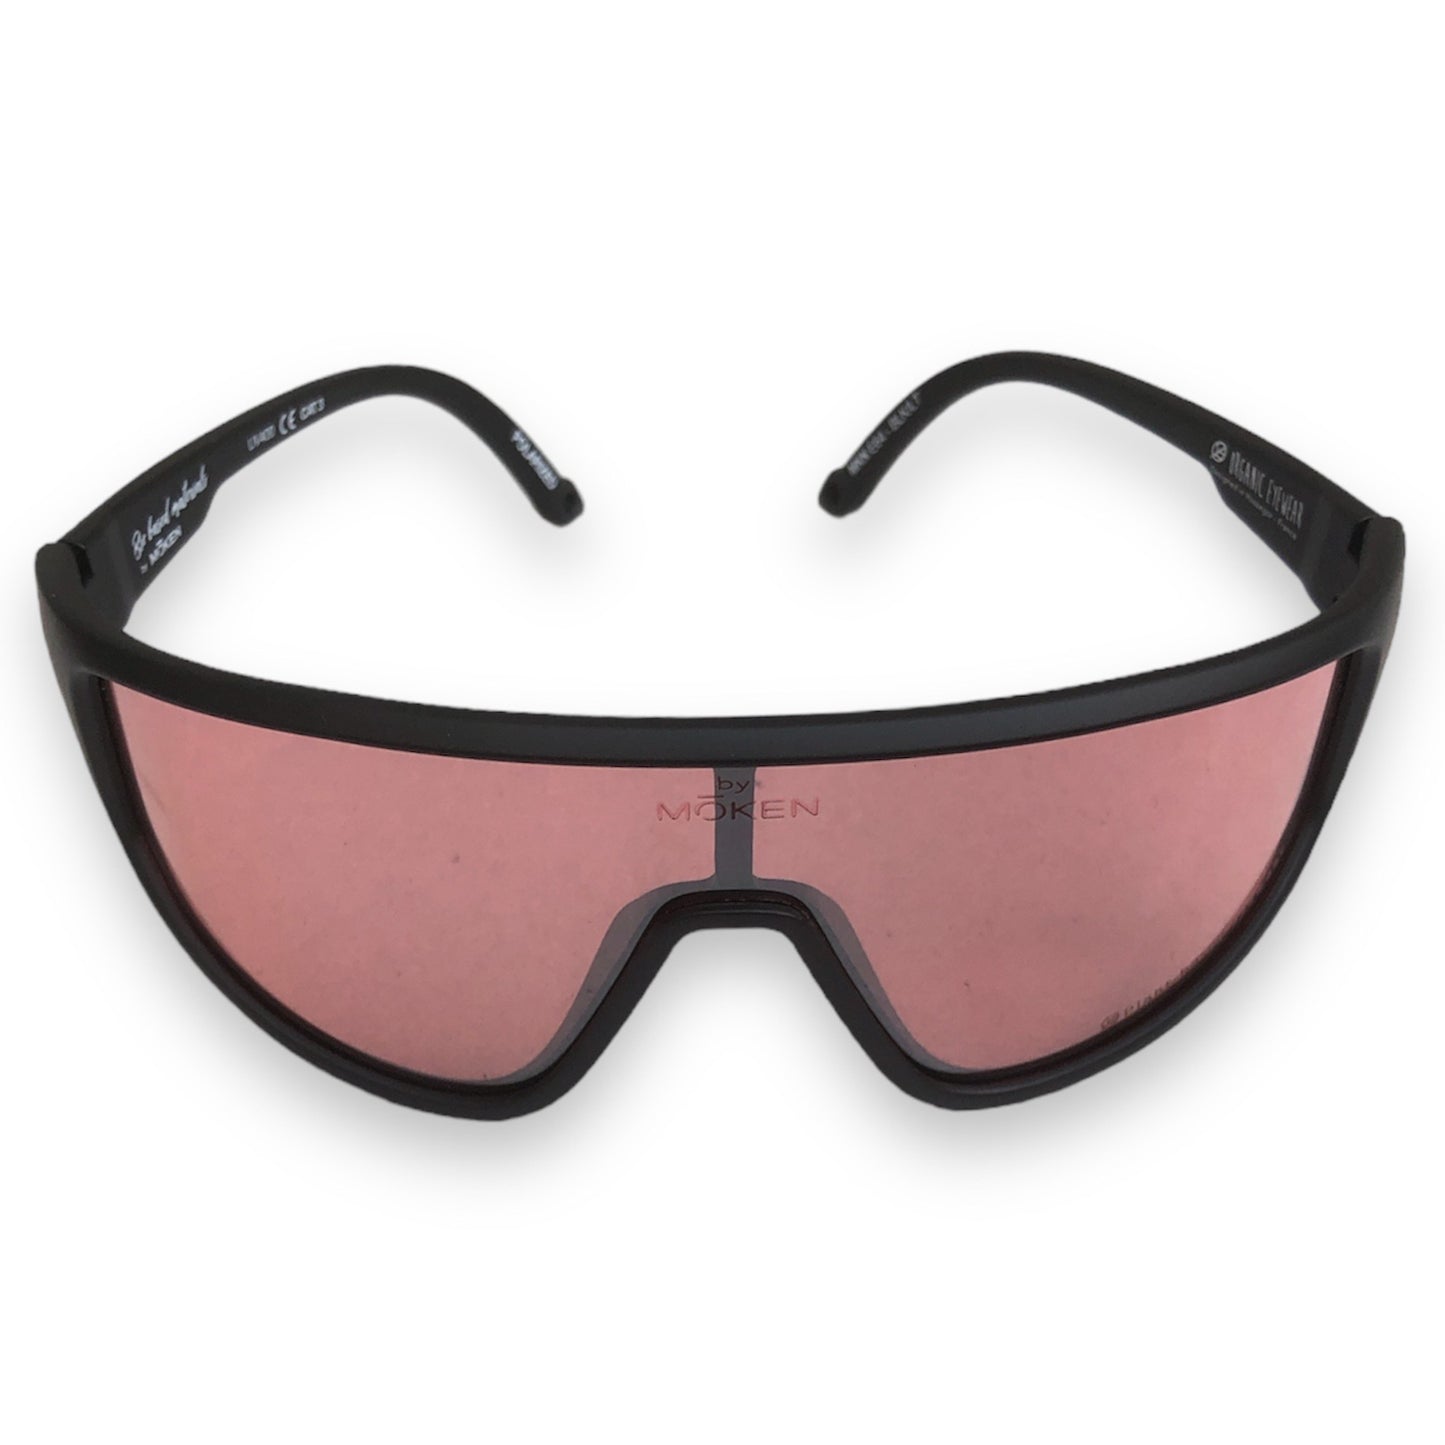 Rockett sunglasses made from plant-based plastic